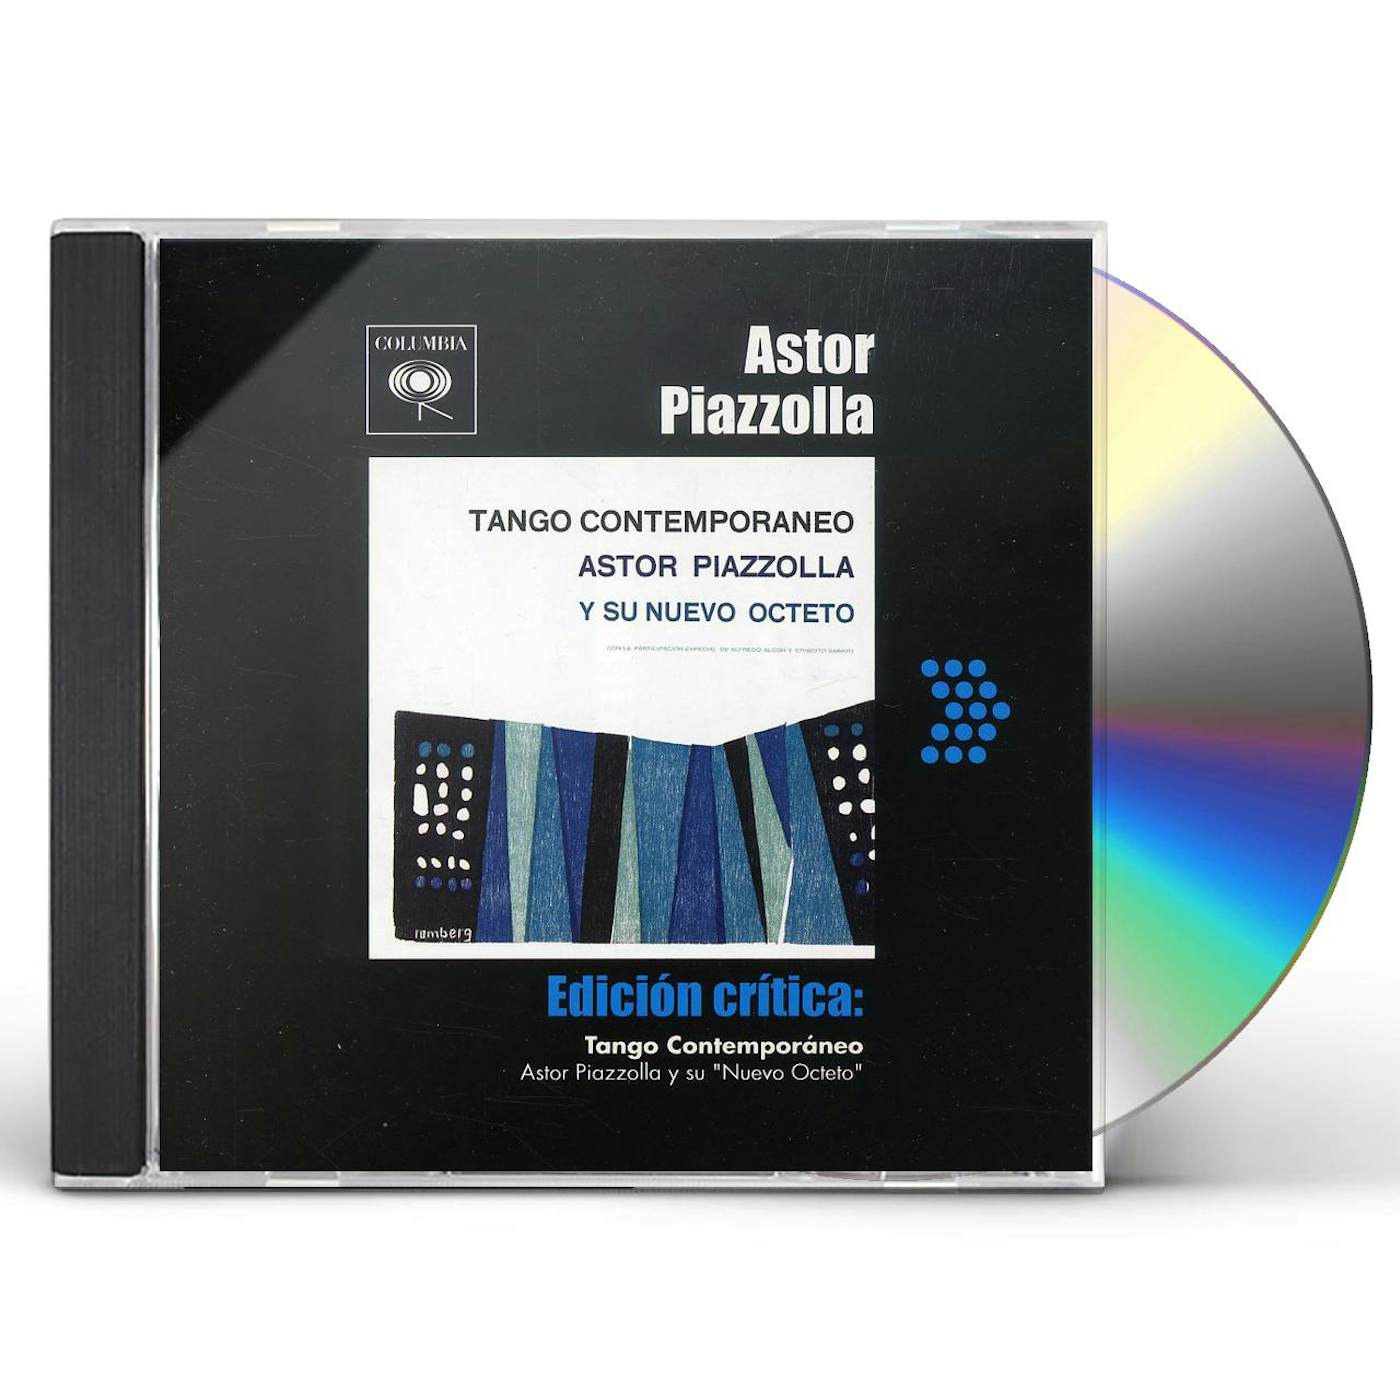 Astor Piazzolla TANGO CONTEMPORANEO CD